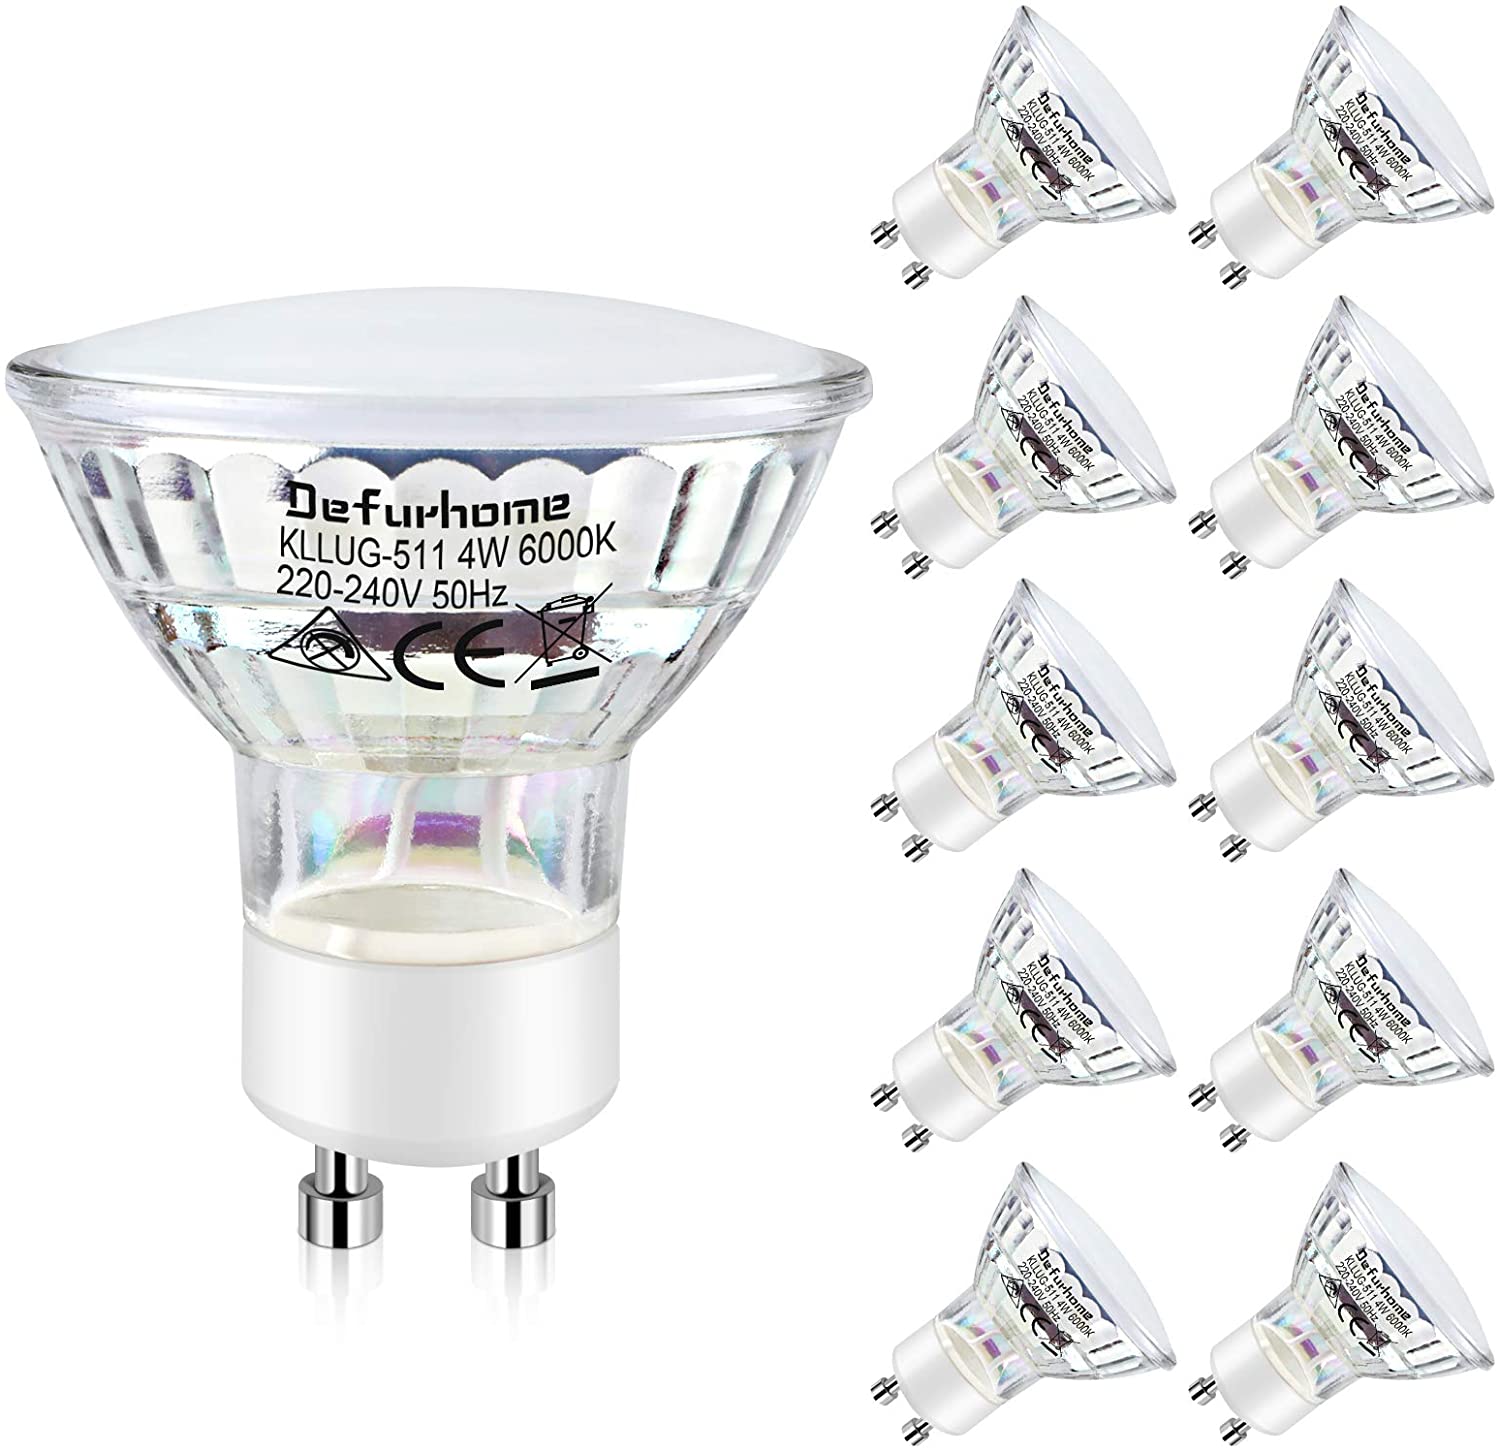 4W Coolligh 450Lm Defurhome Gu10 Led Light Bulbs,50W Halogen Bulbs Equivalent 